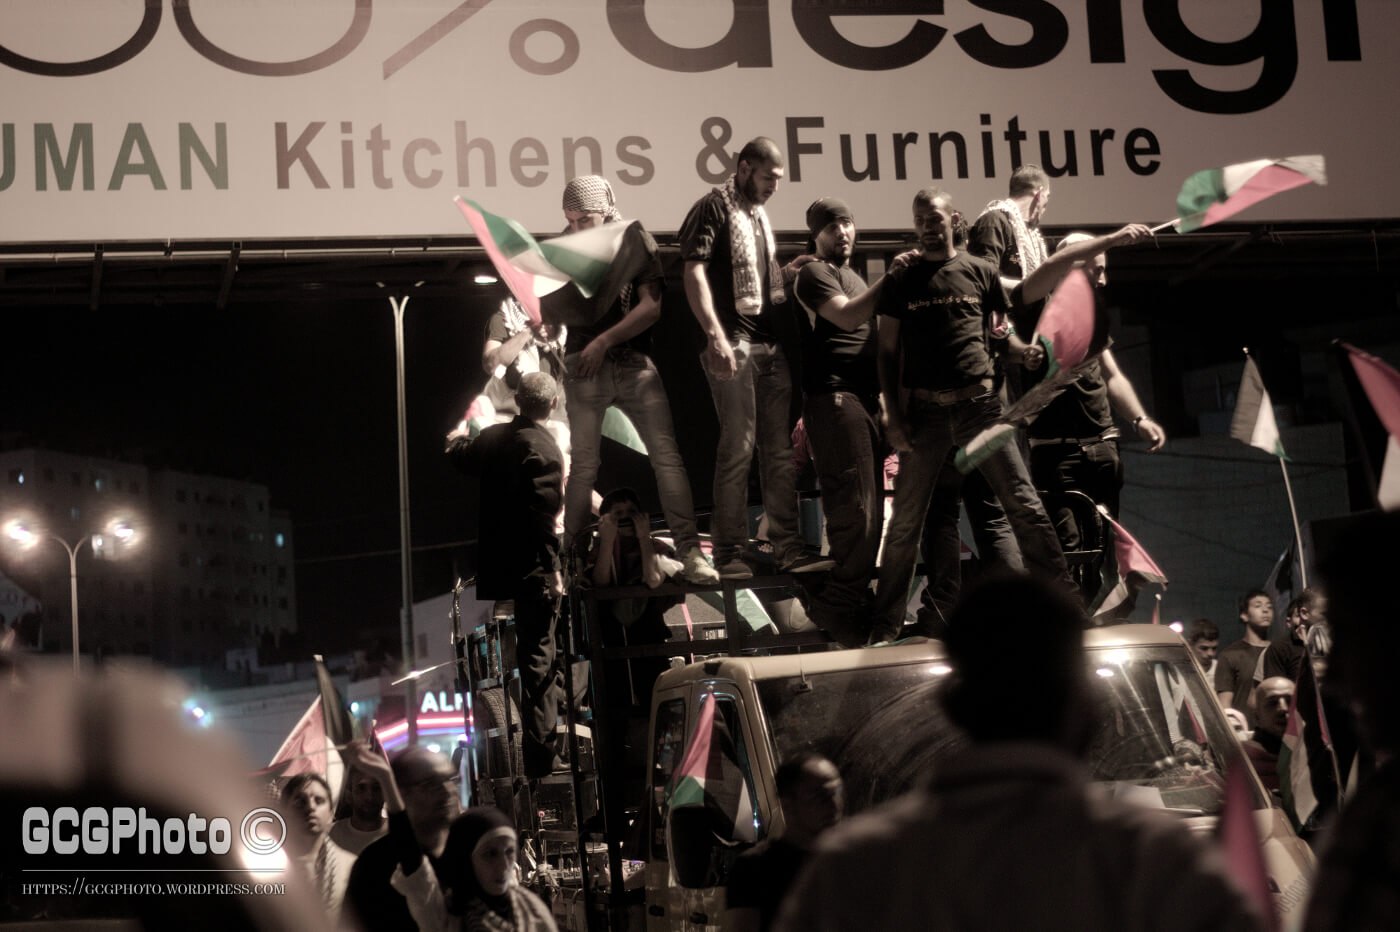 Demonstrators on a truck on its way from downtown Ramallah to Qalandyya. (Photo: Guglielmo Grandinetti)